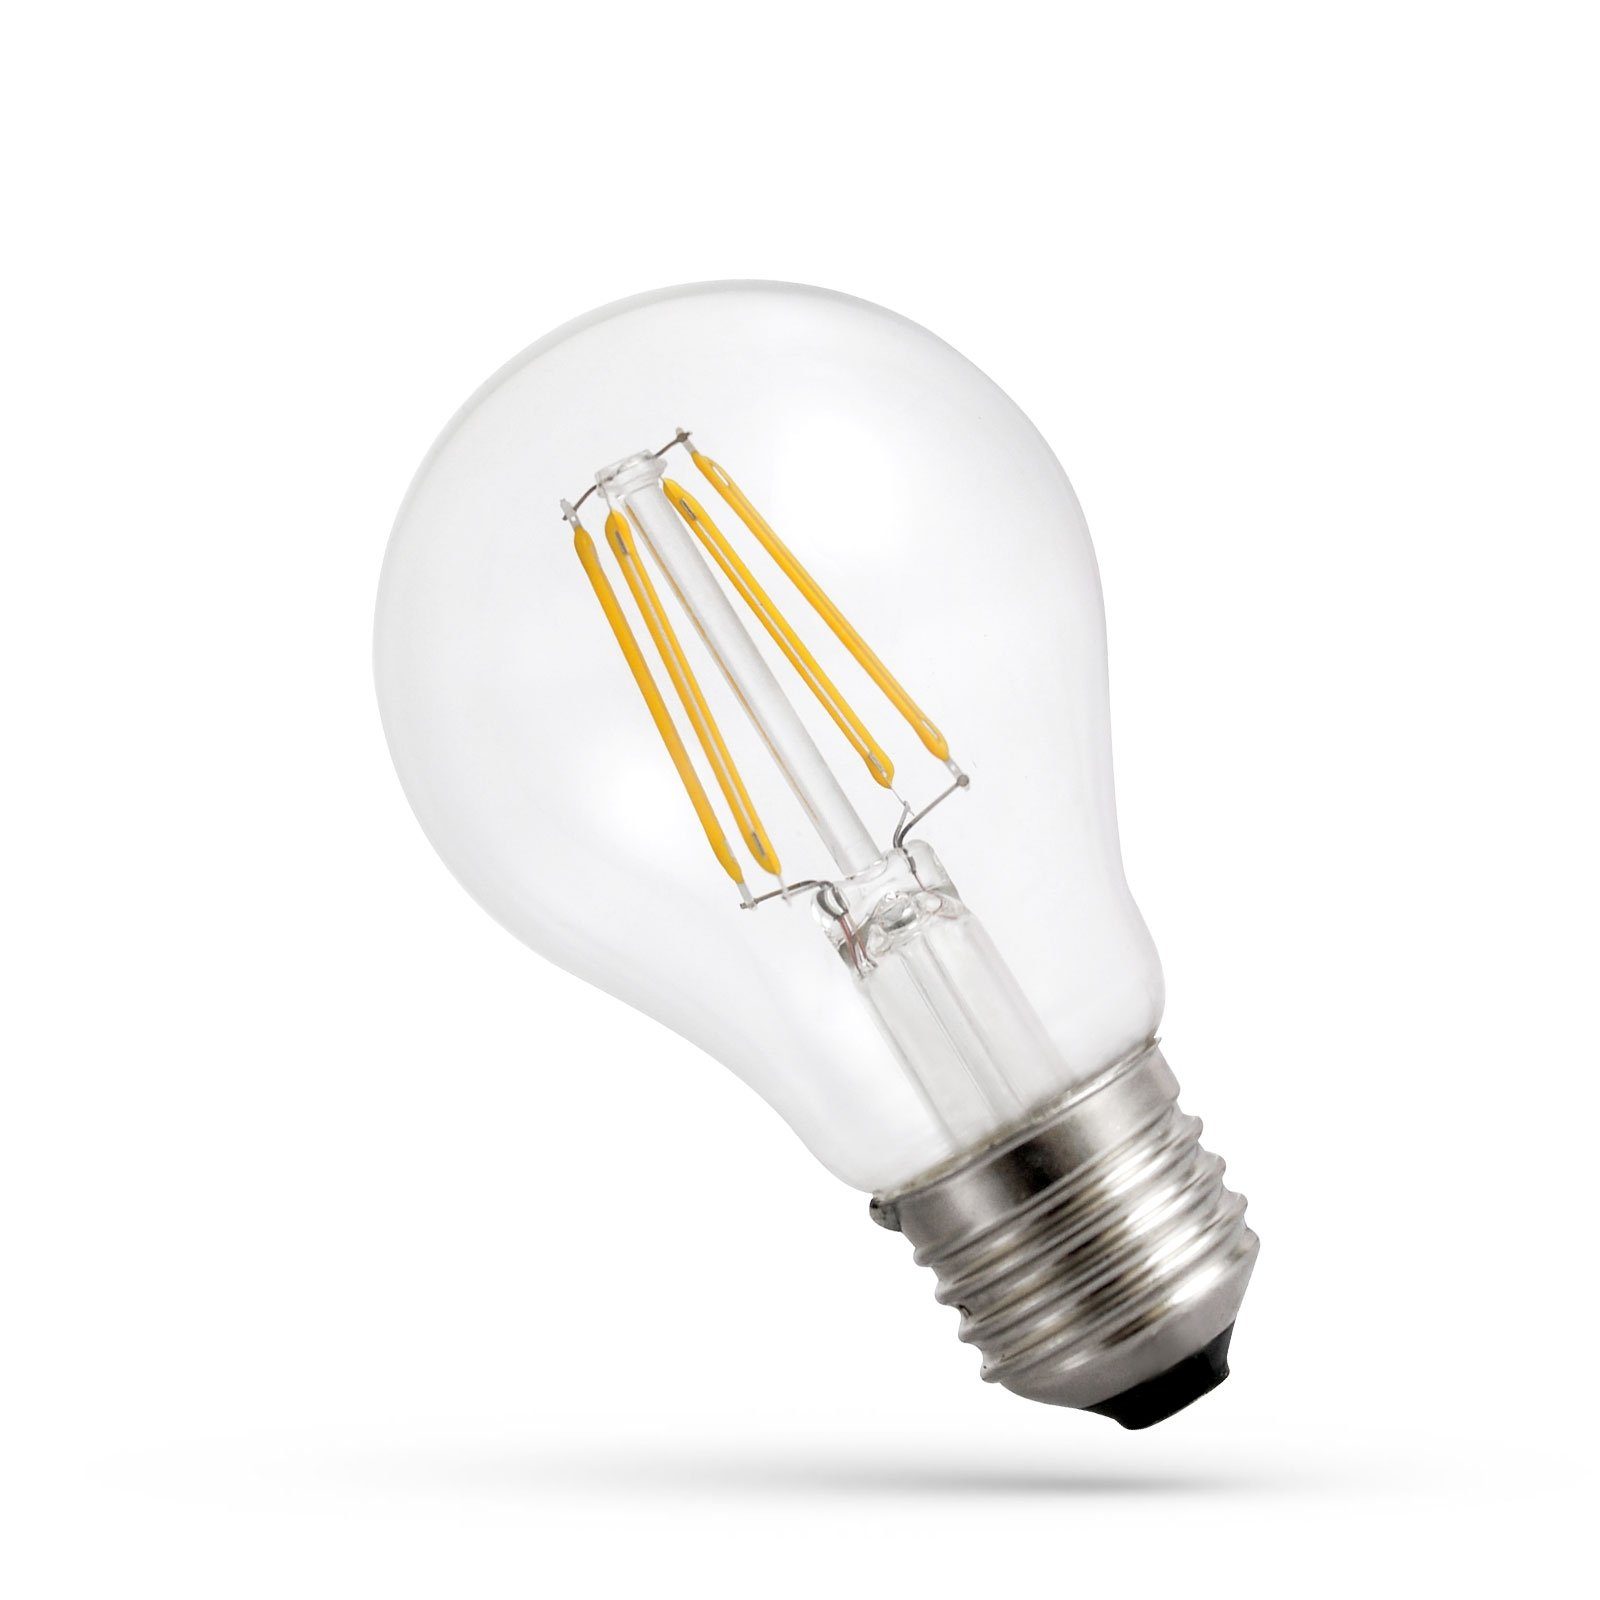 LED-Leuchtmittel FIlament 7W E27 klar Filament 600lm Extra-Warmweiß, LED 1800K, Birne SpectrumLED E27, A60 Extra Warmweiß 300°